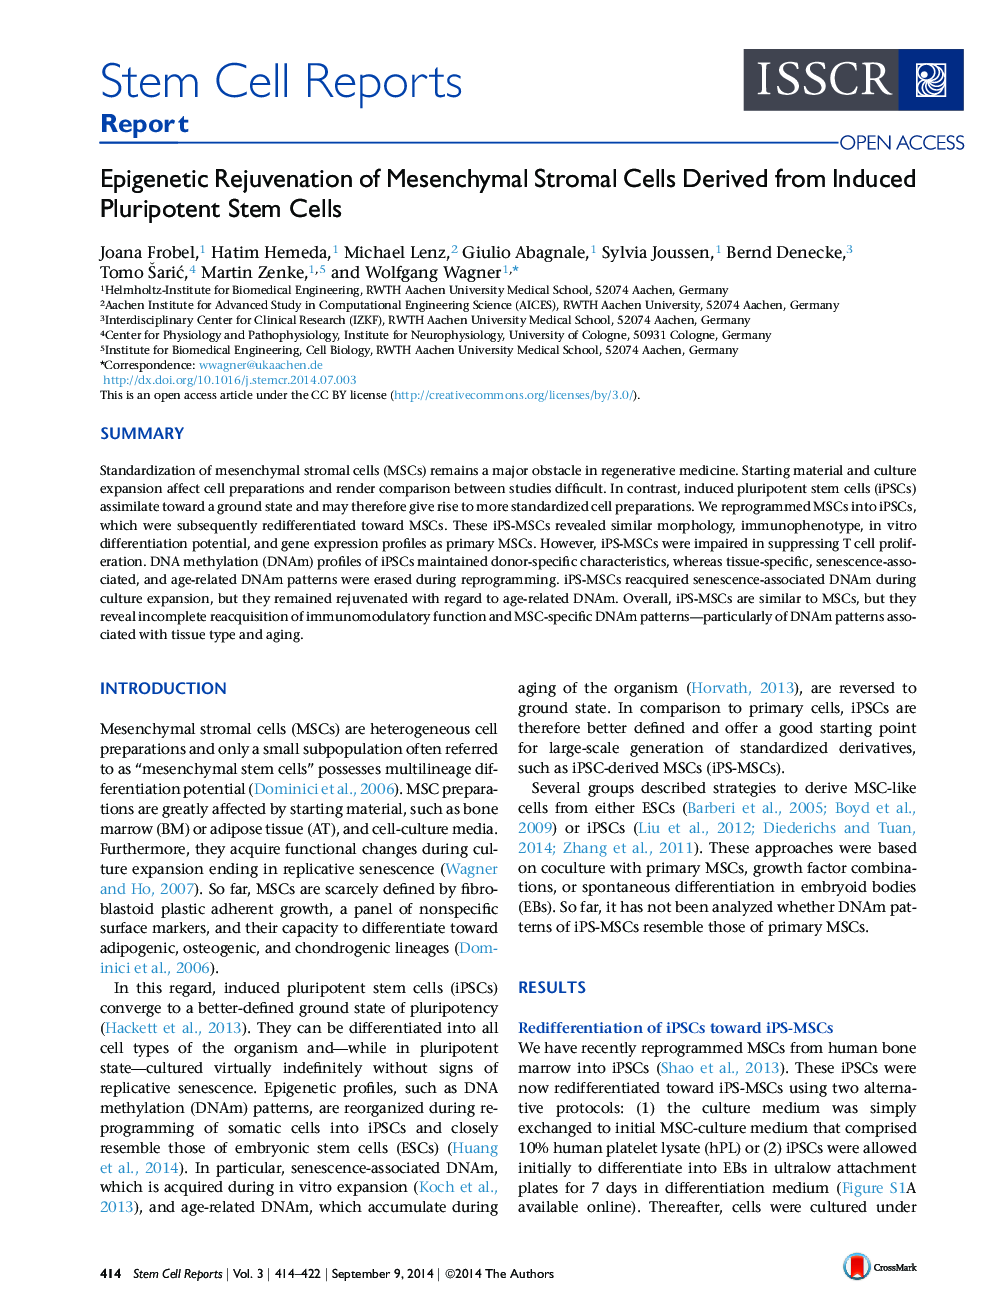 Epigenetic Rejuvenation of Mesenchymal Stromal Cells Derived from Induced Pluripotent Stem Cells 